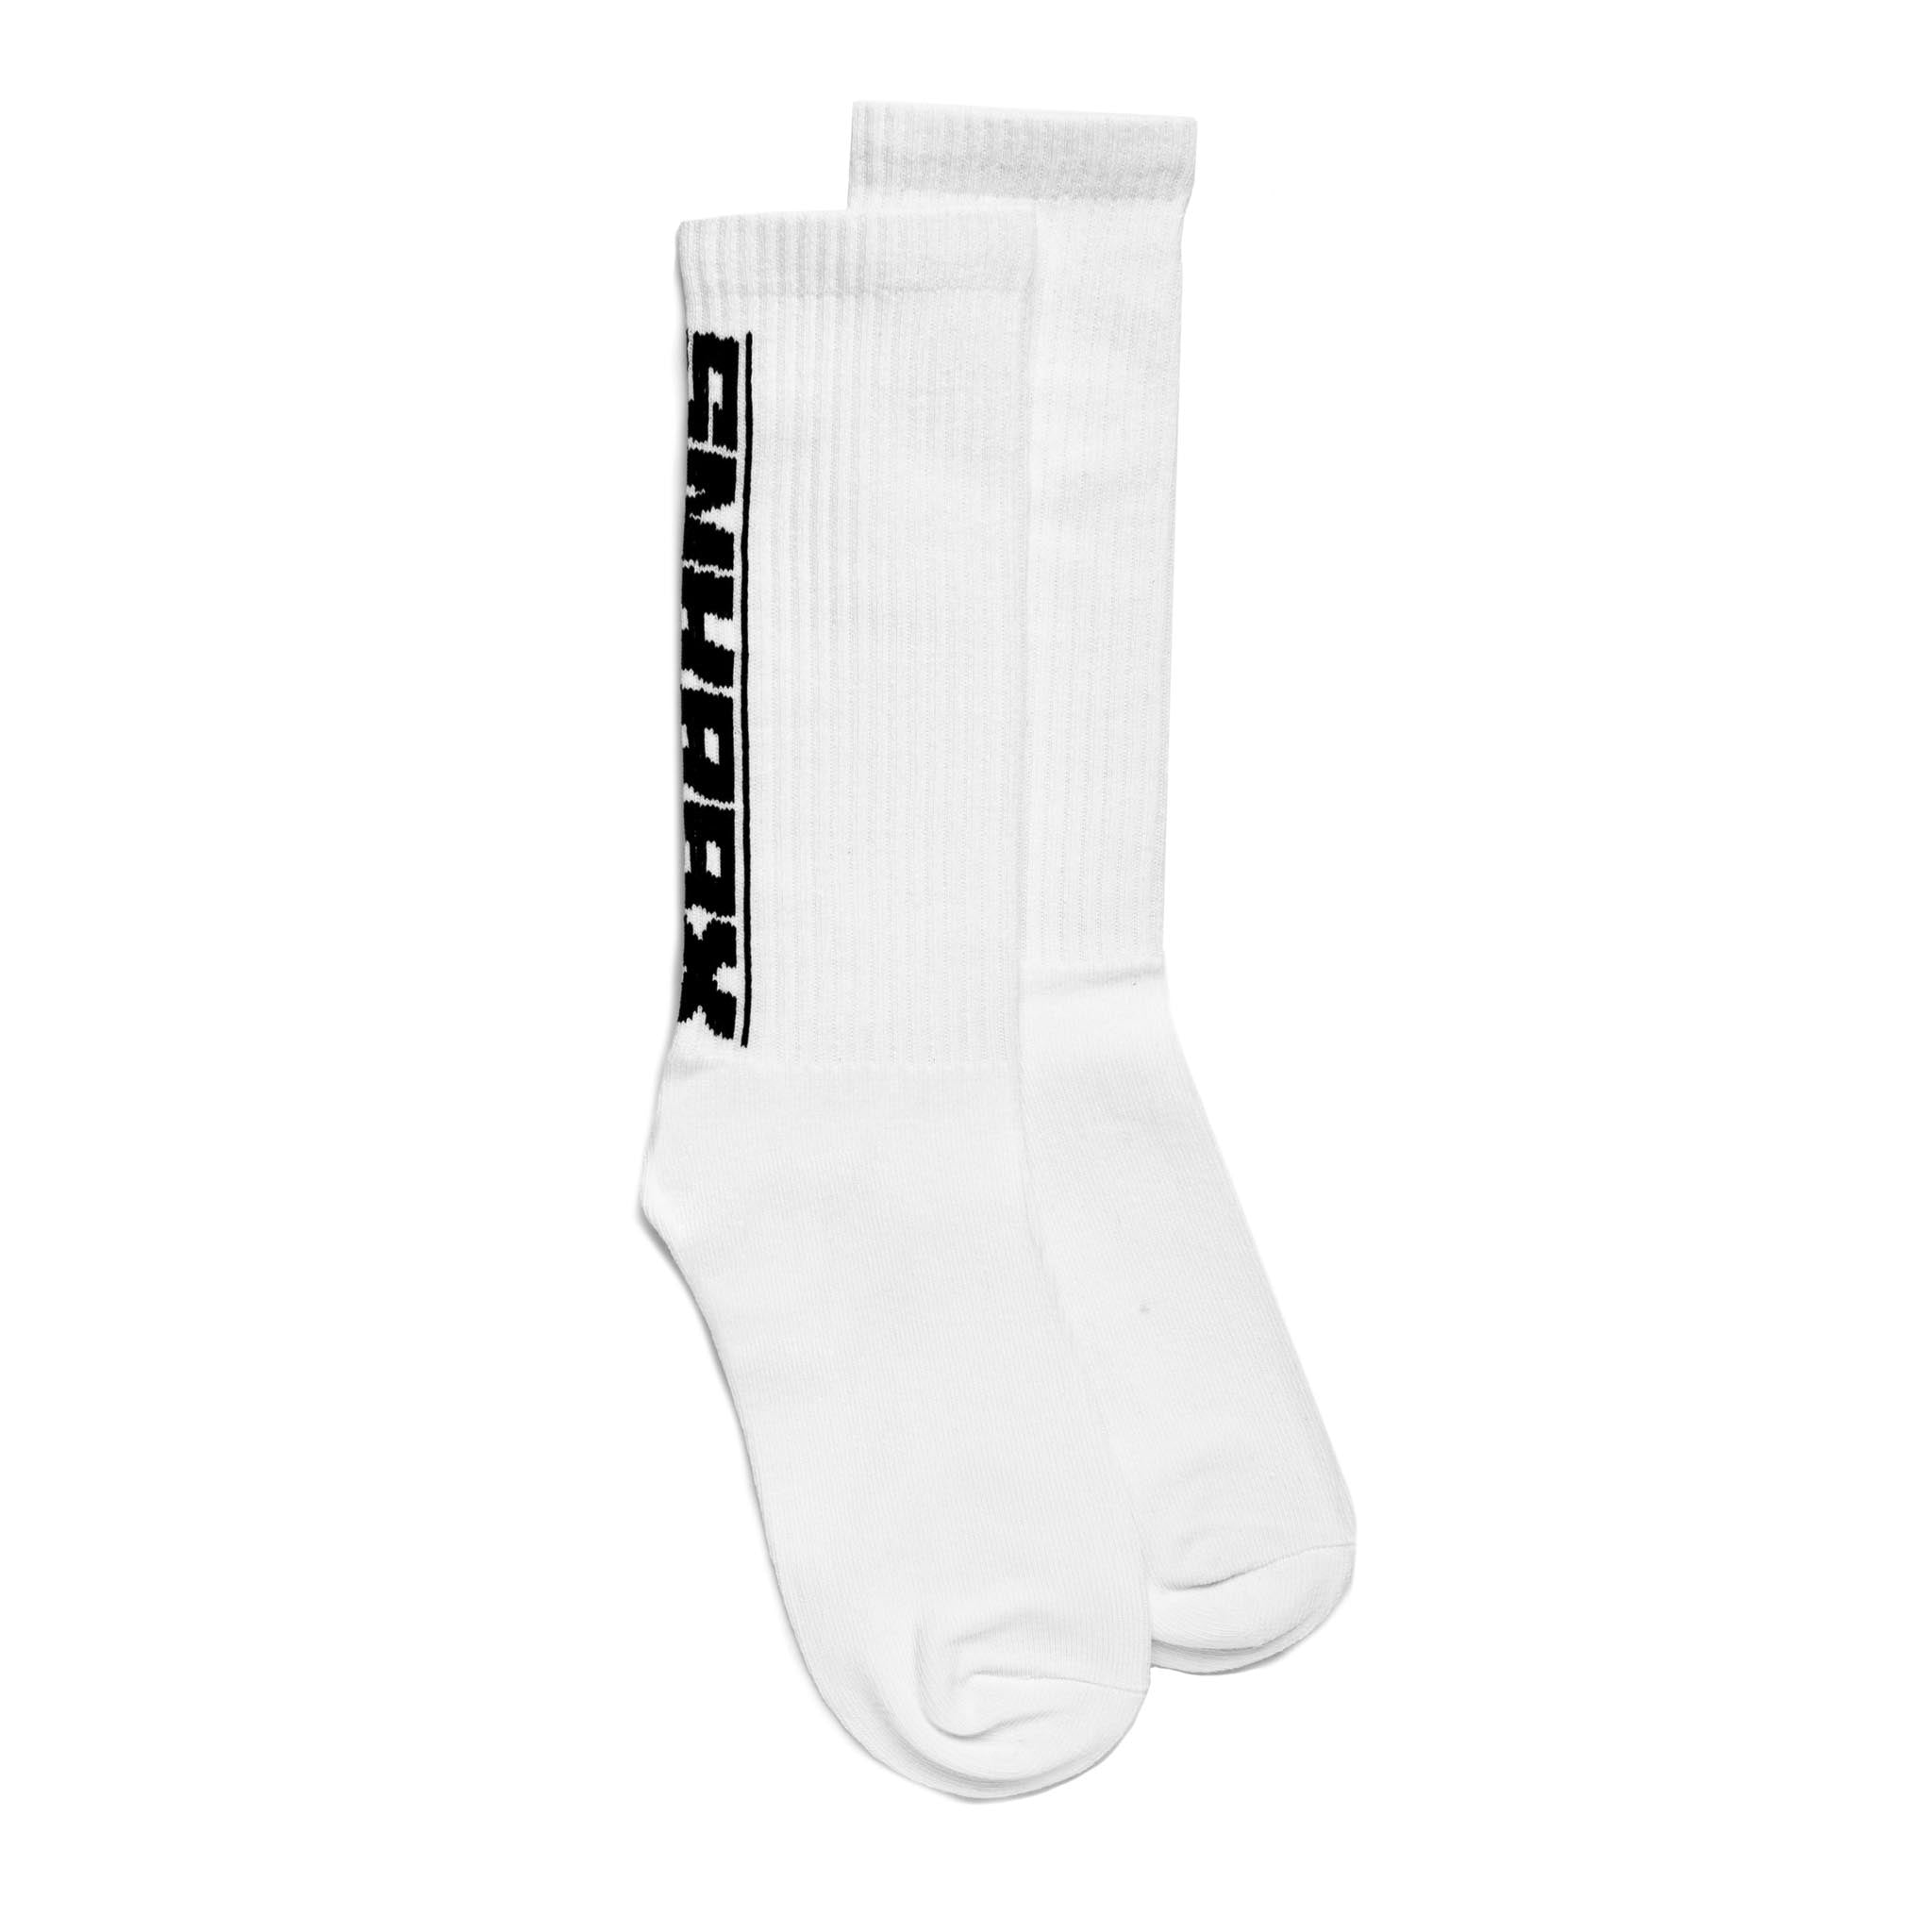 Sneakerbox 'REDLINE' Crew Socks White